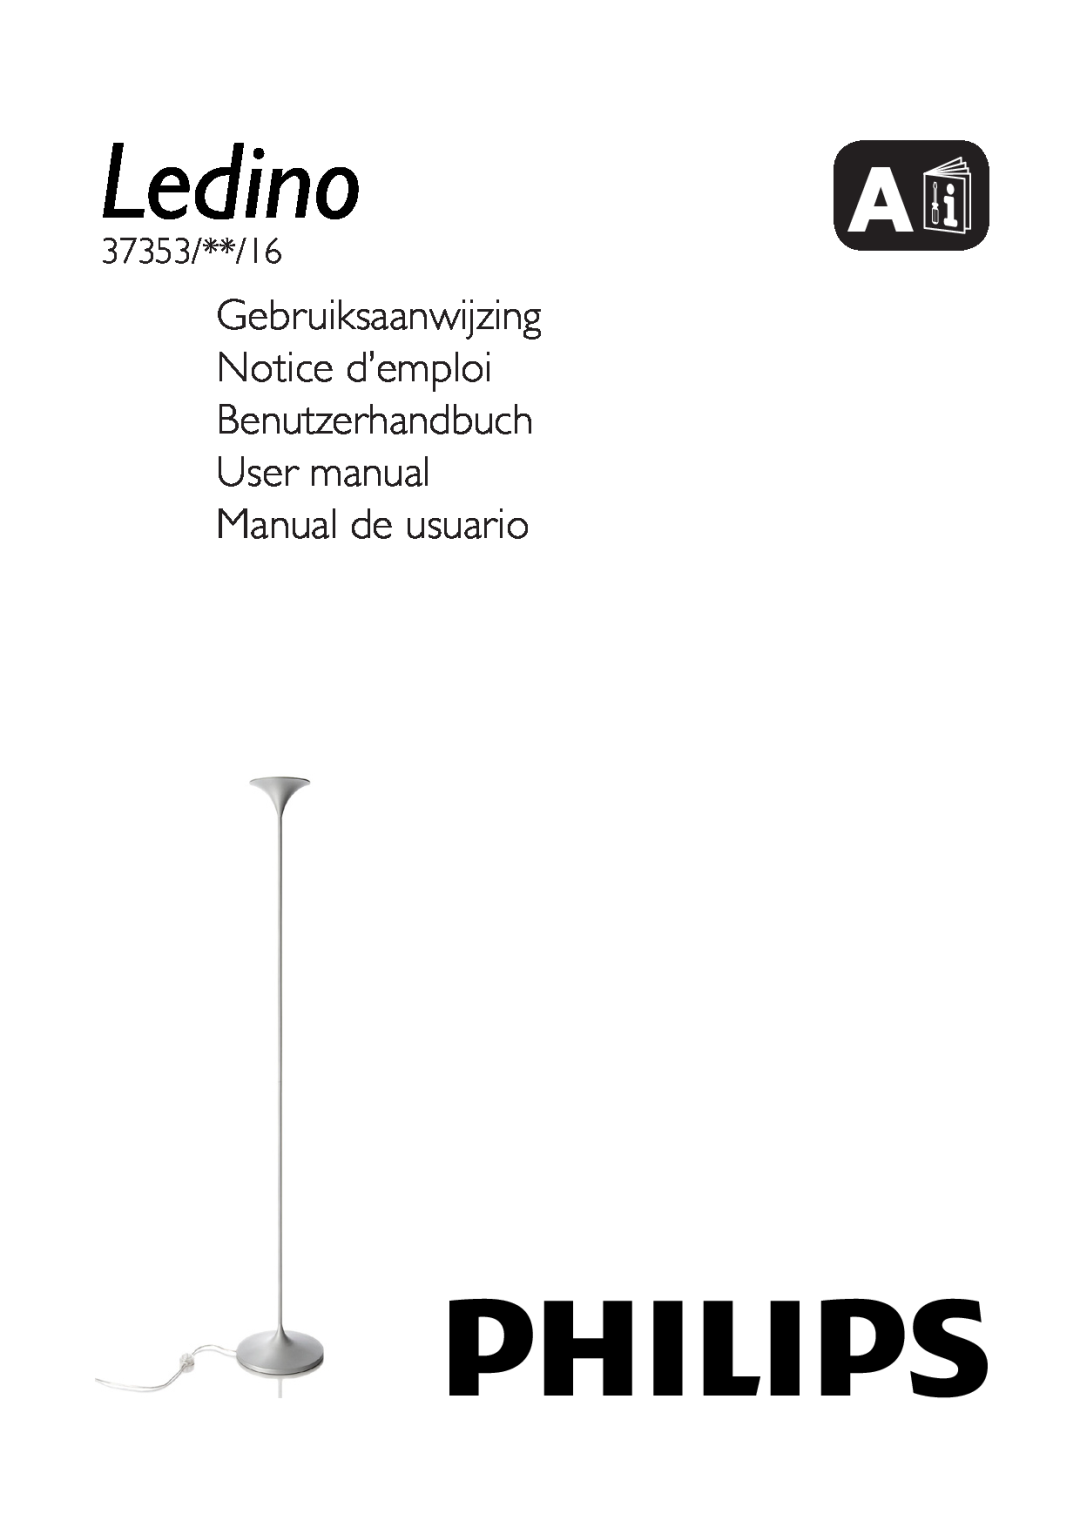 Philips 37353/31/16 user manual Gebruiksaanwijzing Notice d’emploi, Benutzerhandbuch User manual Manual de usuario, Ledino 